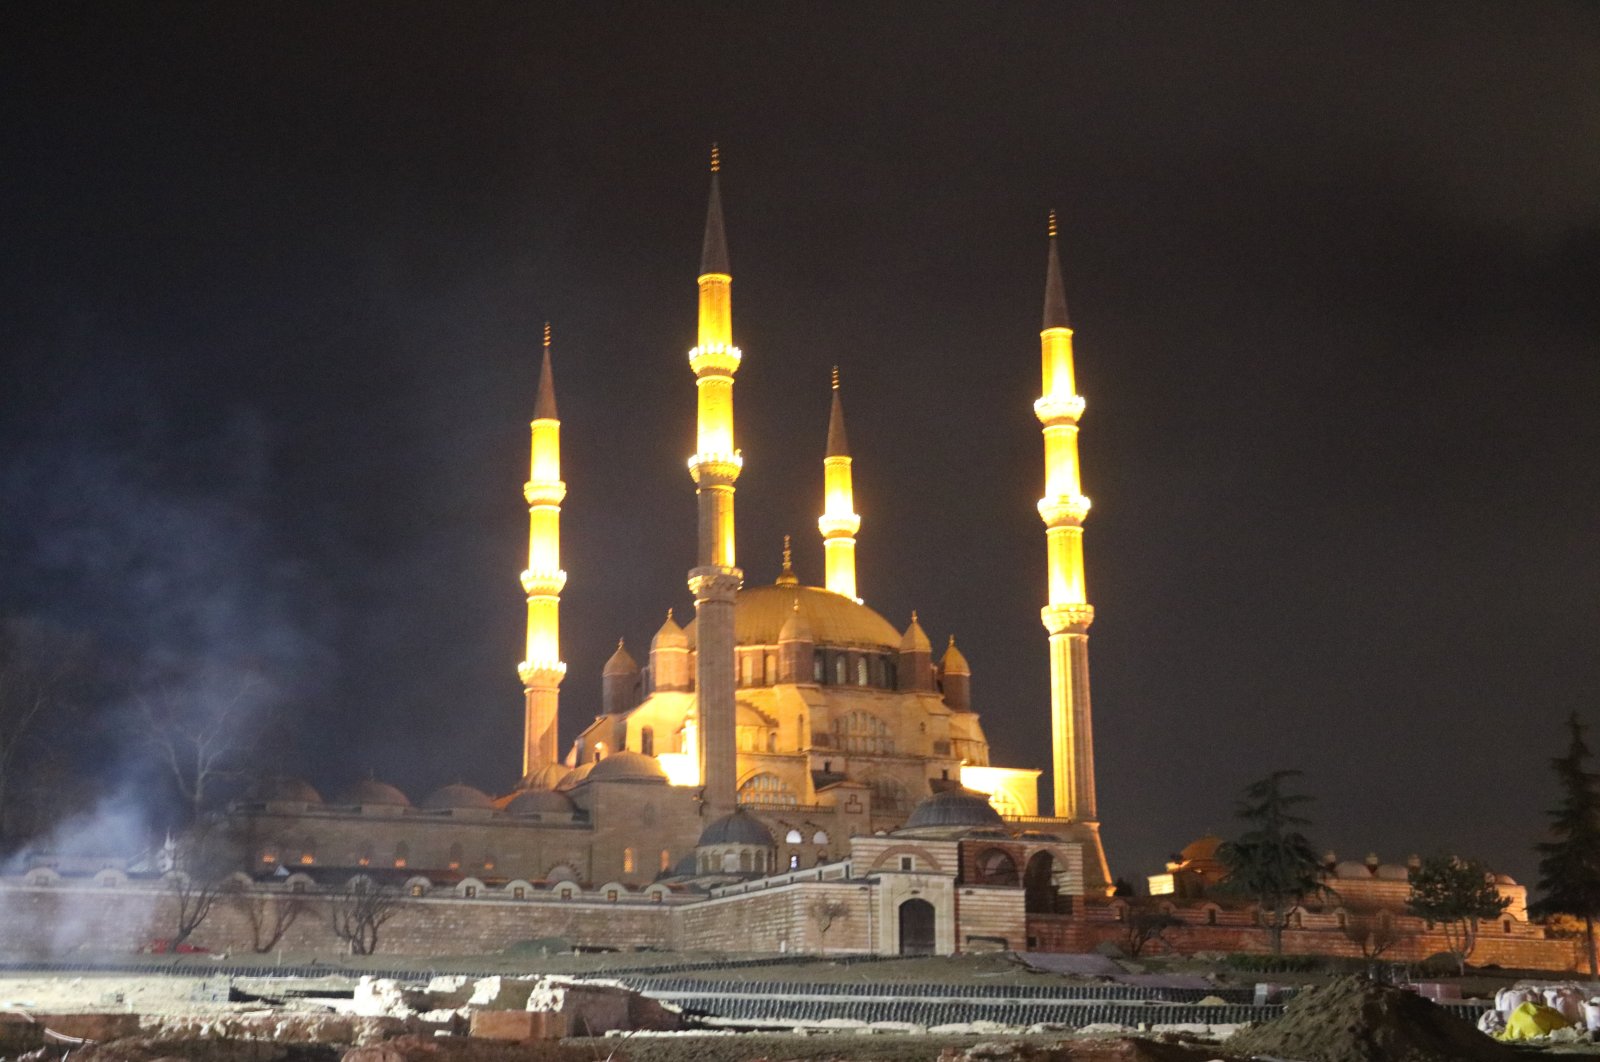 The minarets of Selimiye Mosque are seen illuminated on Berat Night in northwestern Edirne, Turkey, March 17, 2022. (IHA Photo)